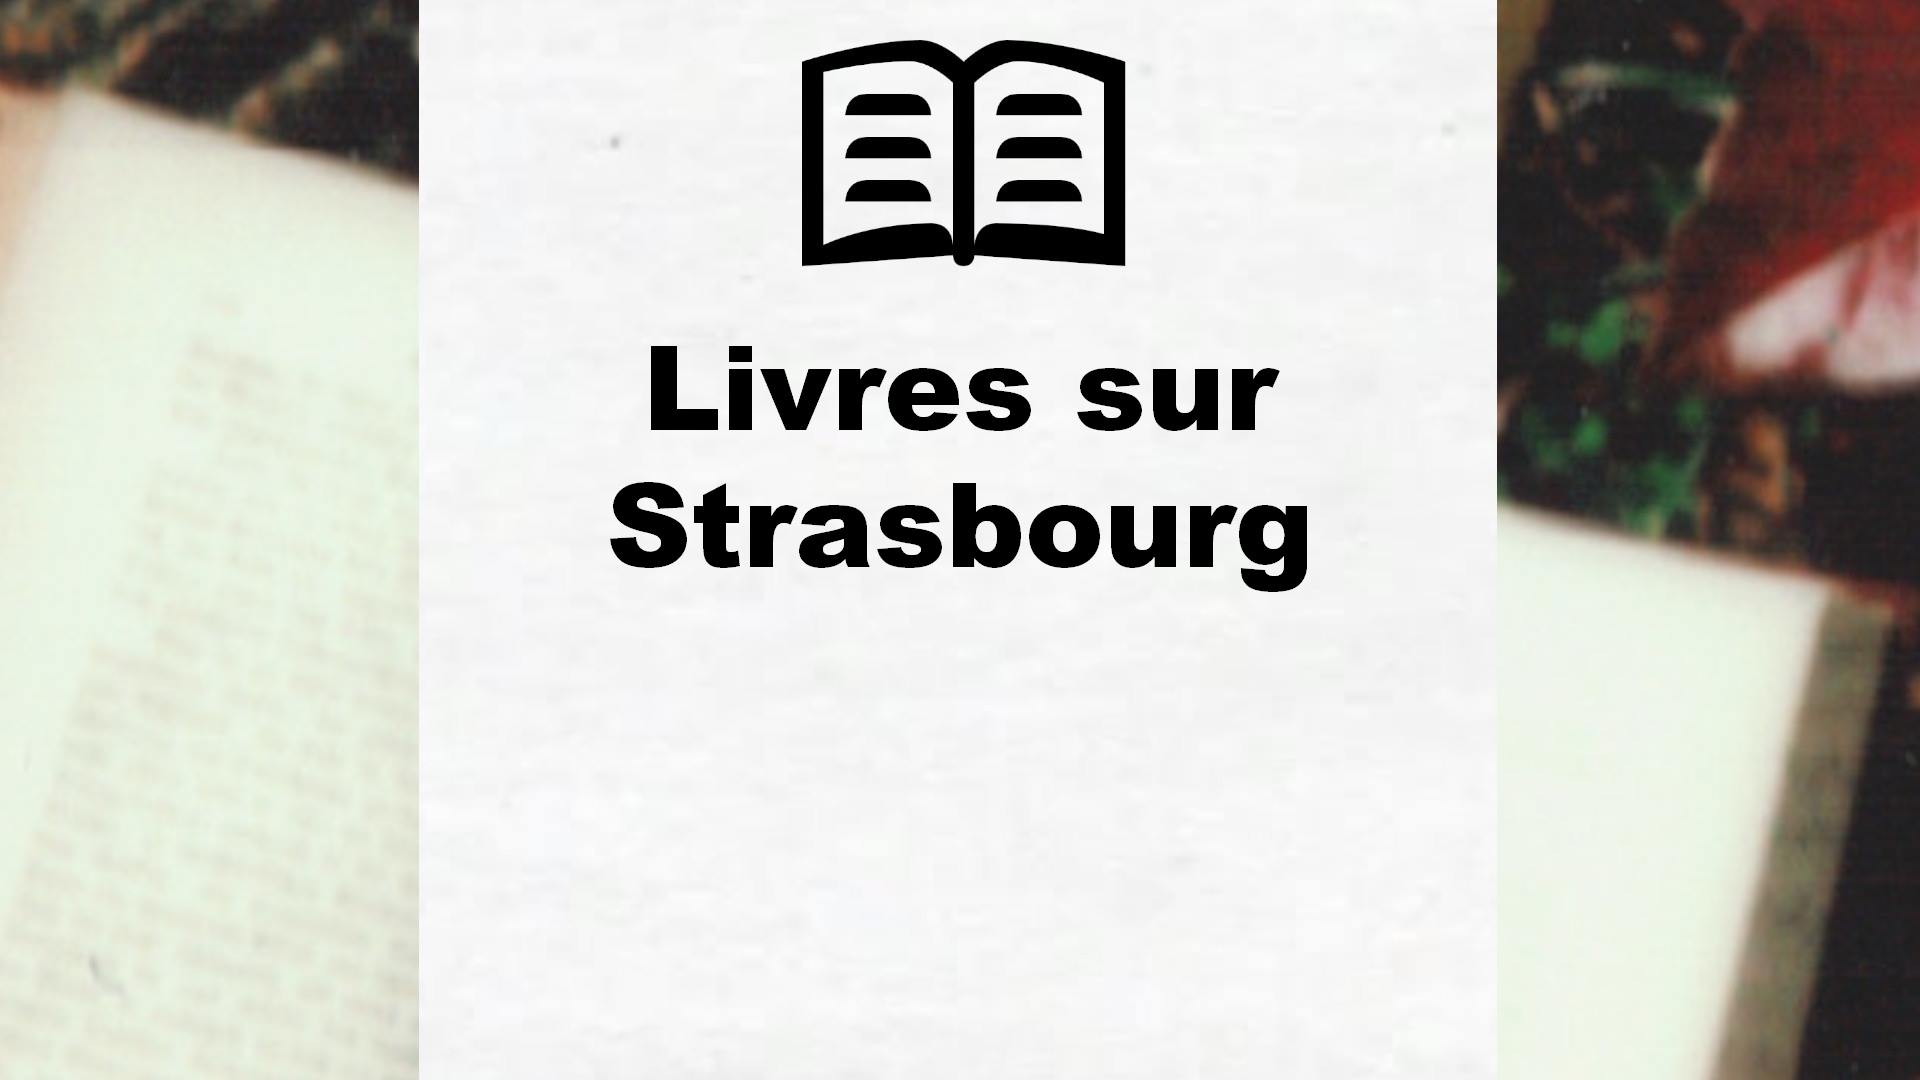 Livres sur Strasbourg